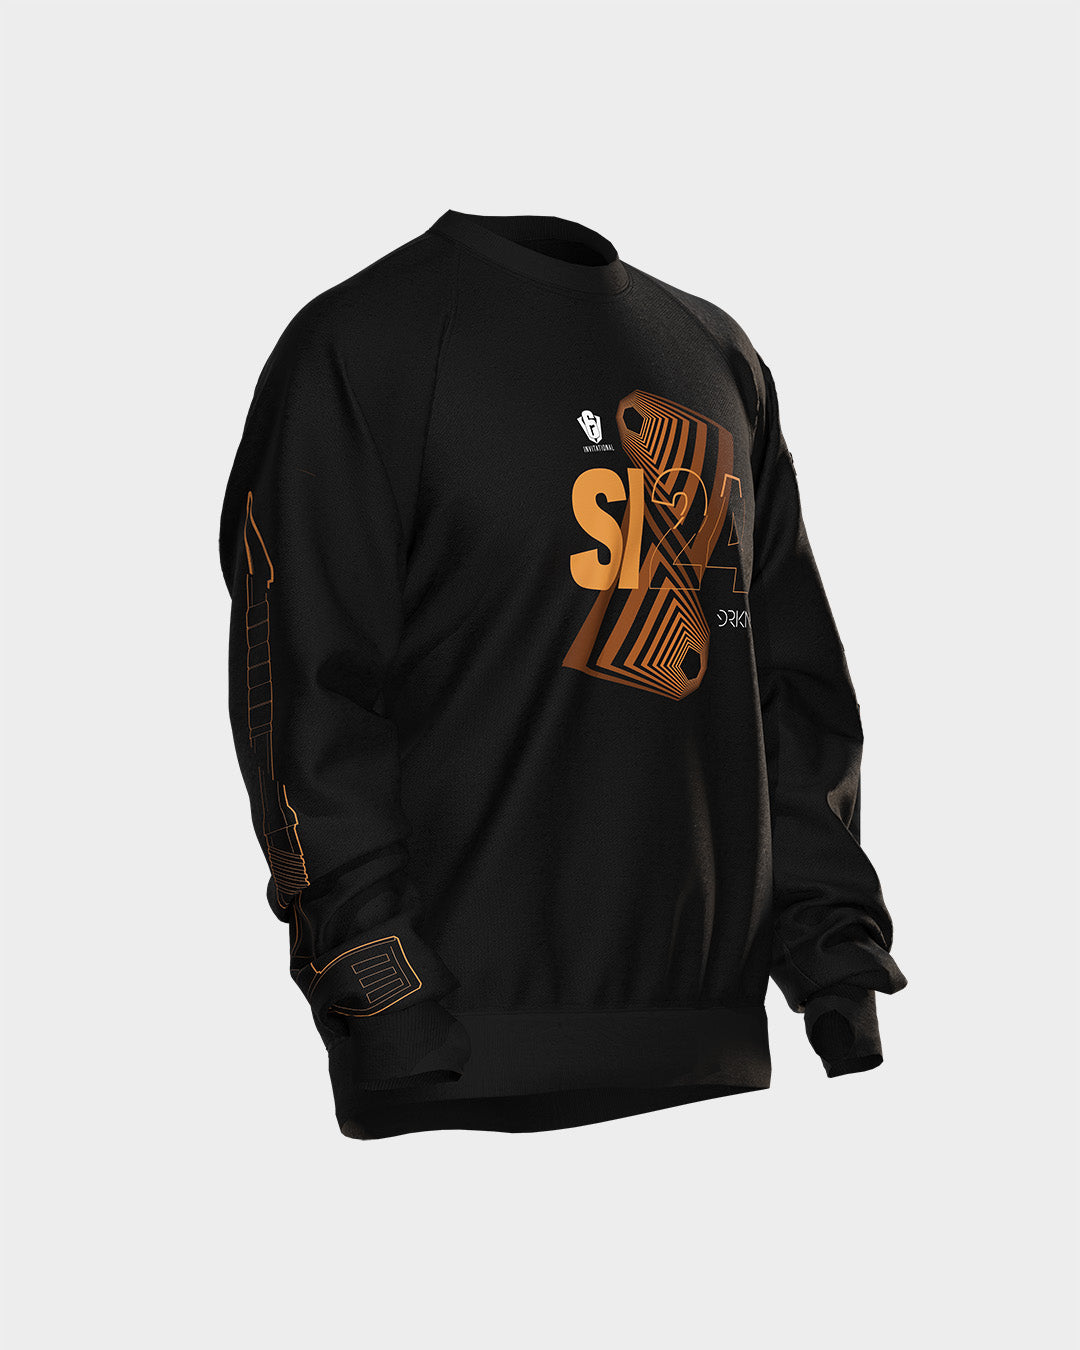 The SI24 Sweatshirt